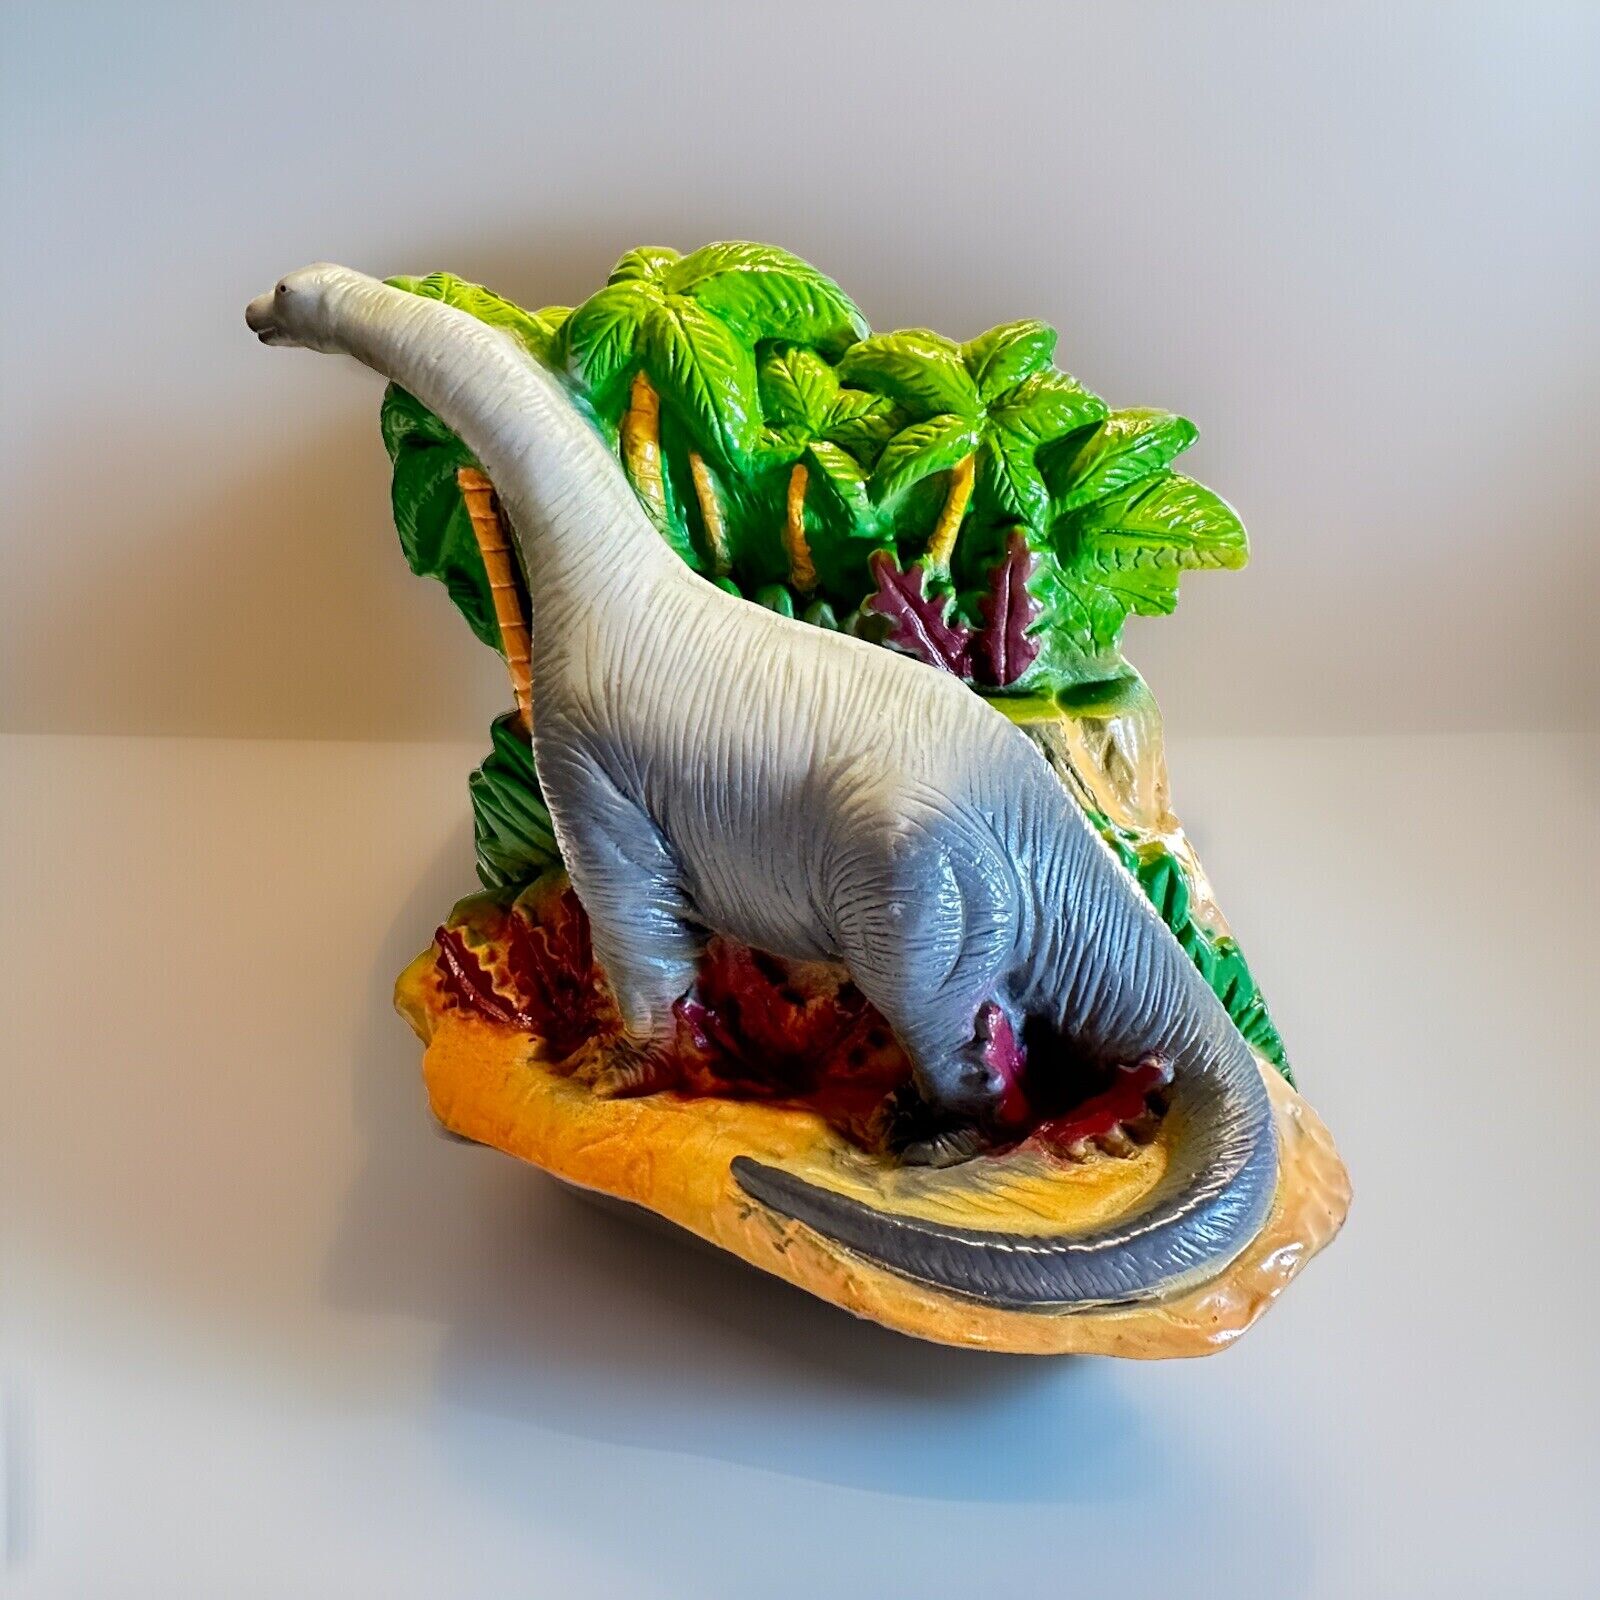 SOMA Plastic Brontosaurus Bank Toy With Plug Circa 1987